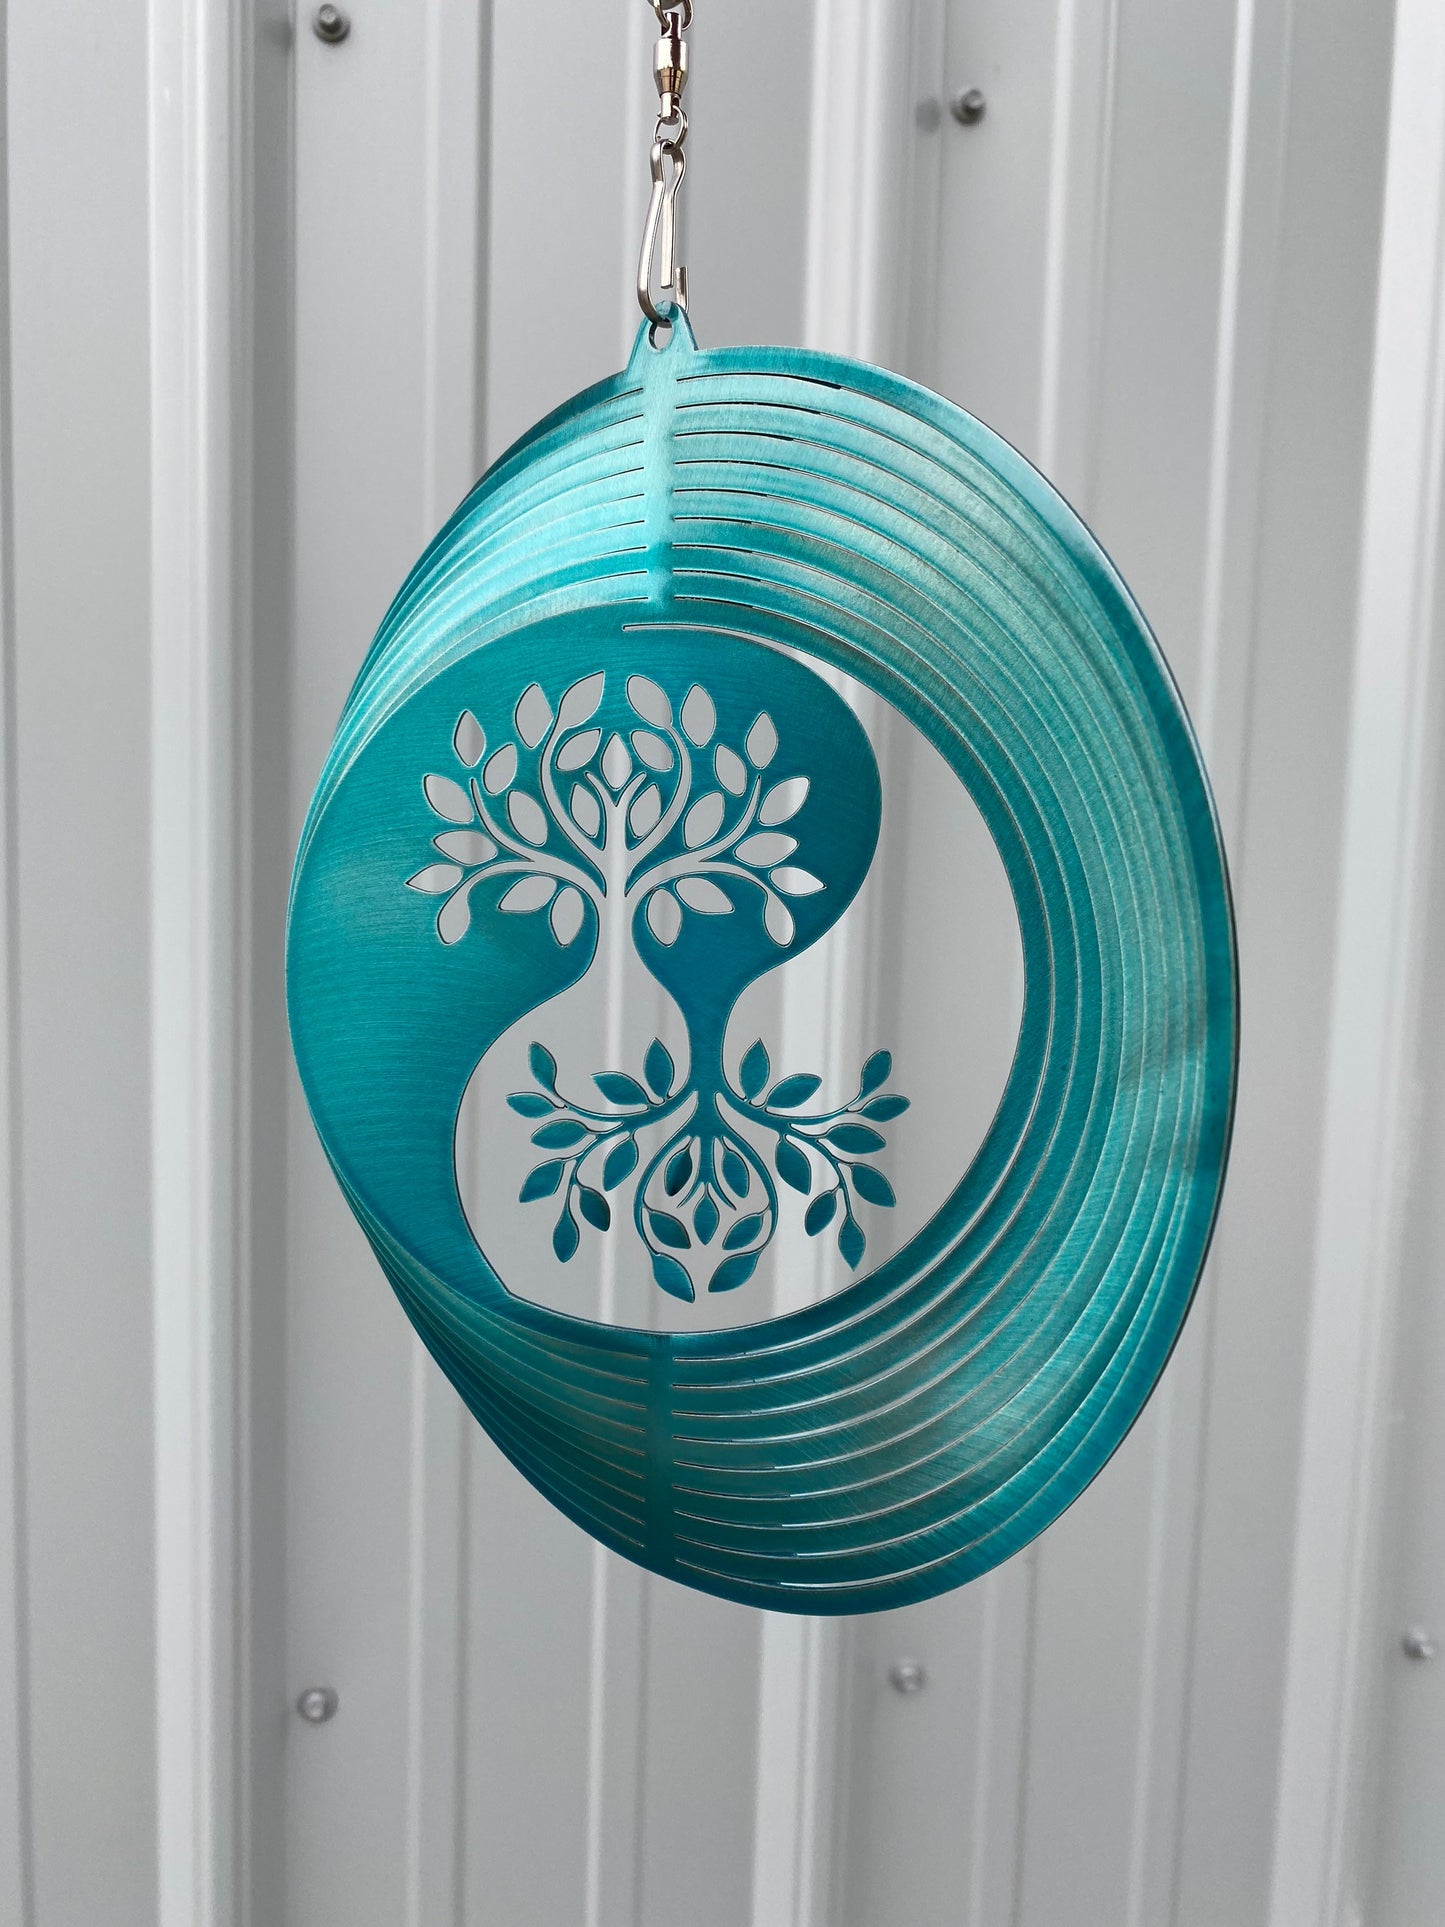 Yin yang tree metal art wind spinner, meditation gift, gift for gardener, garden decorations, patio decorations